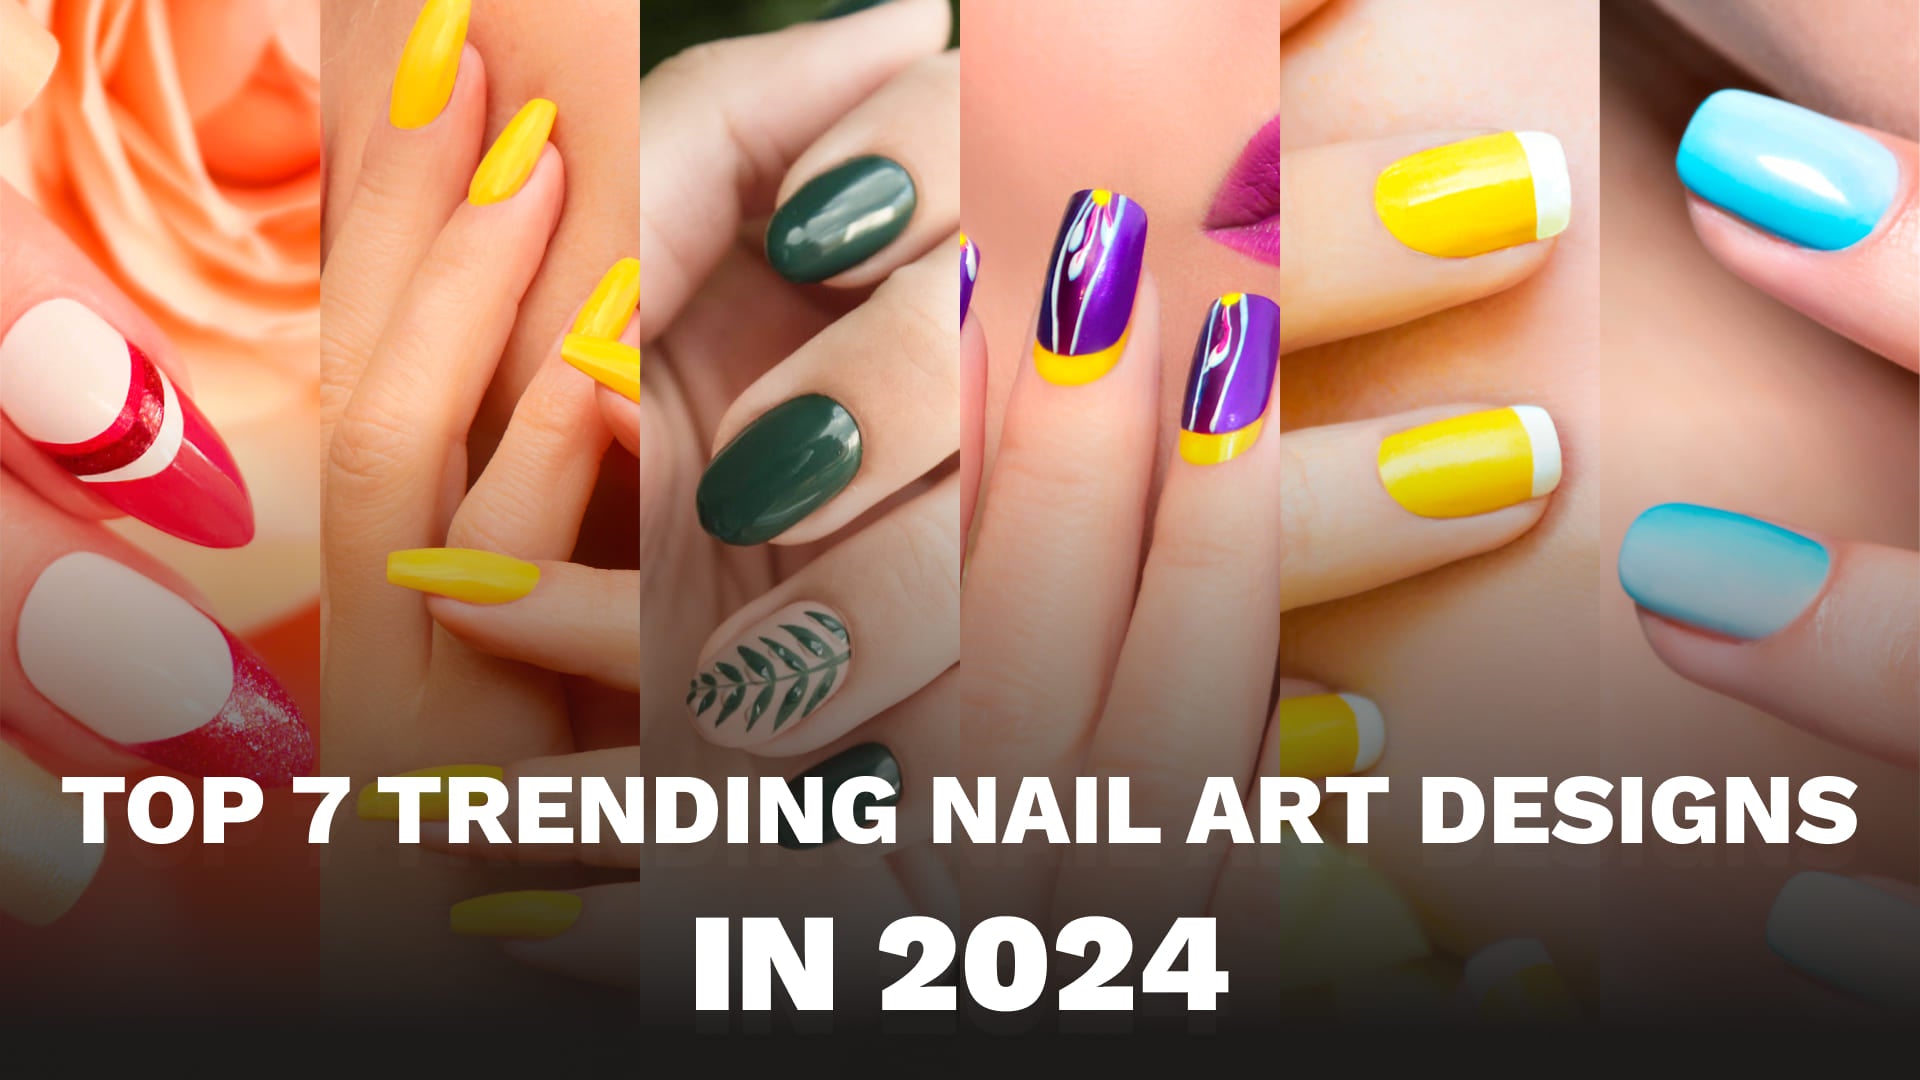 Top 7 Trending Nail Art Designs in 2024